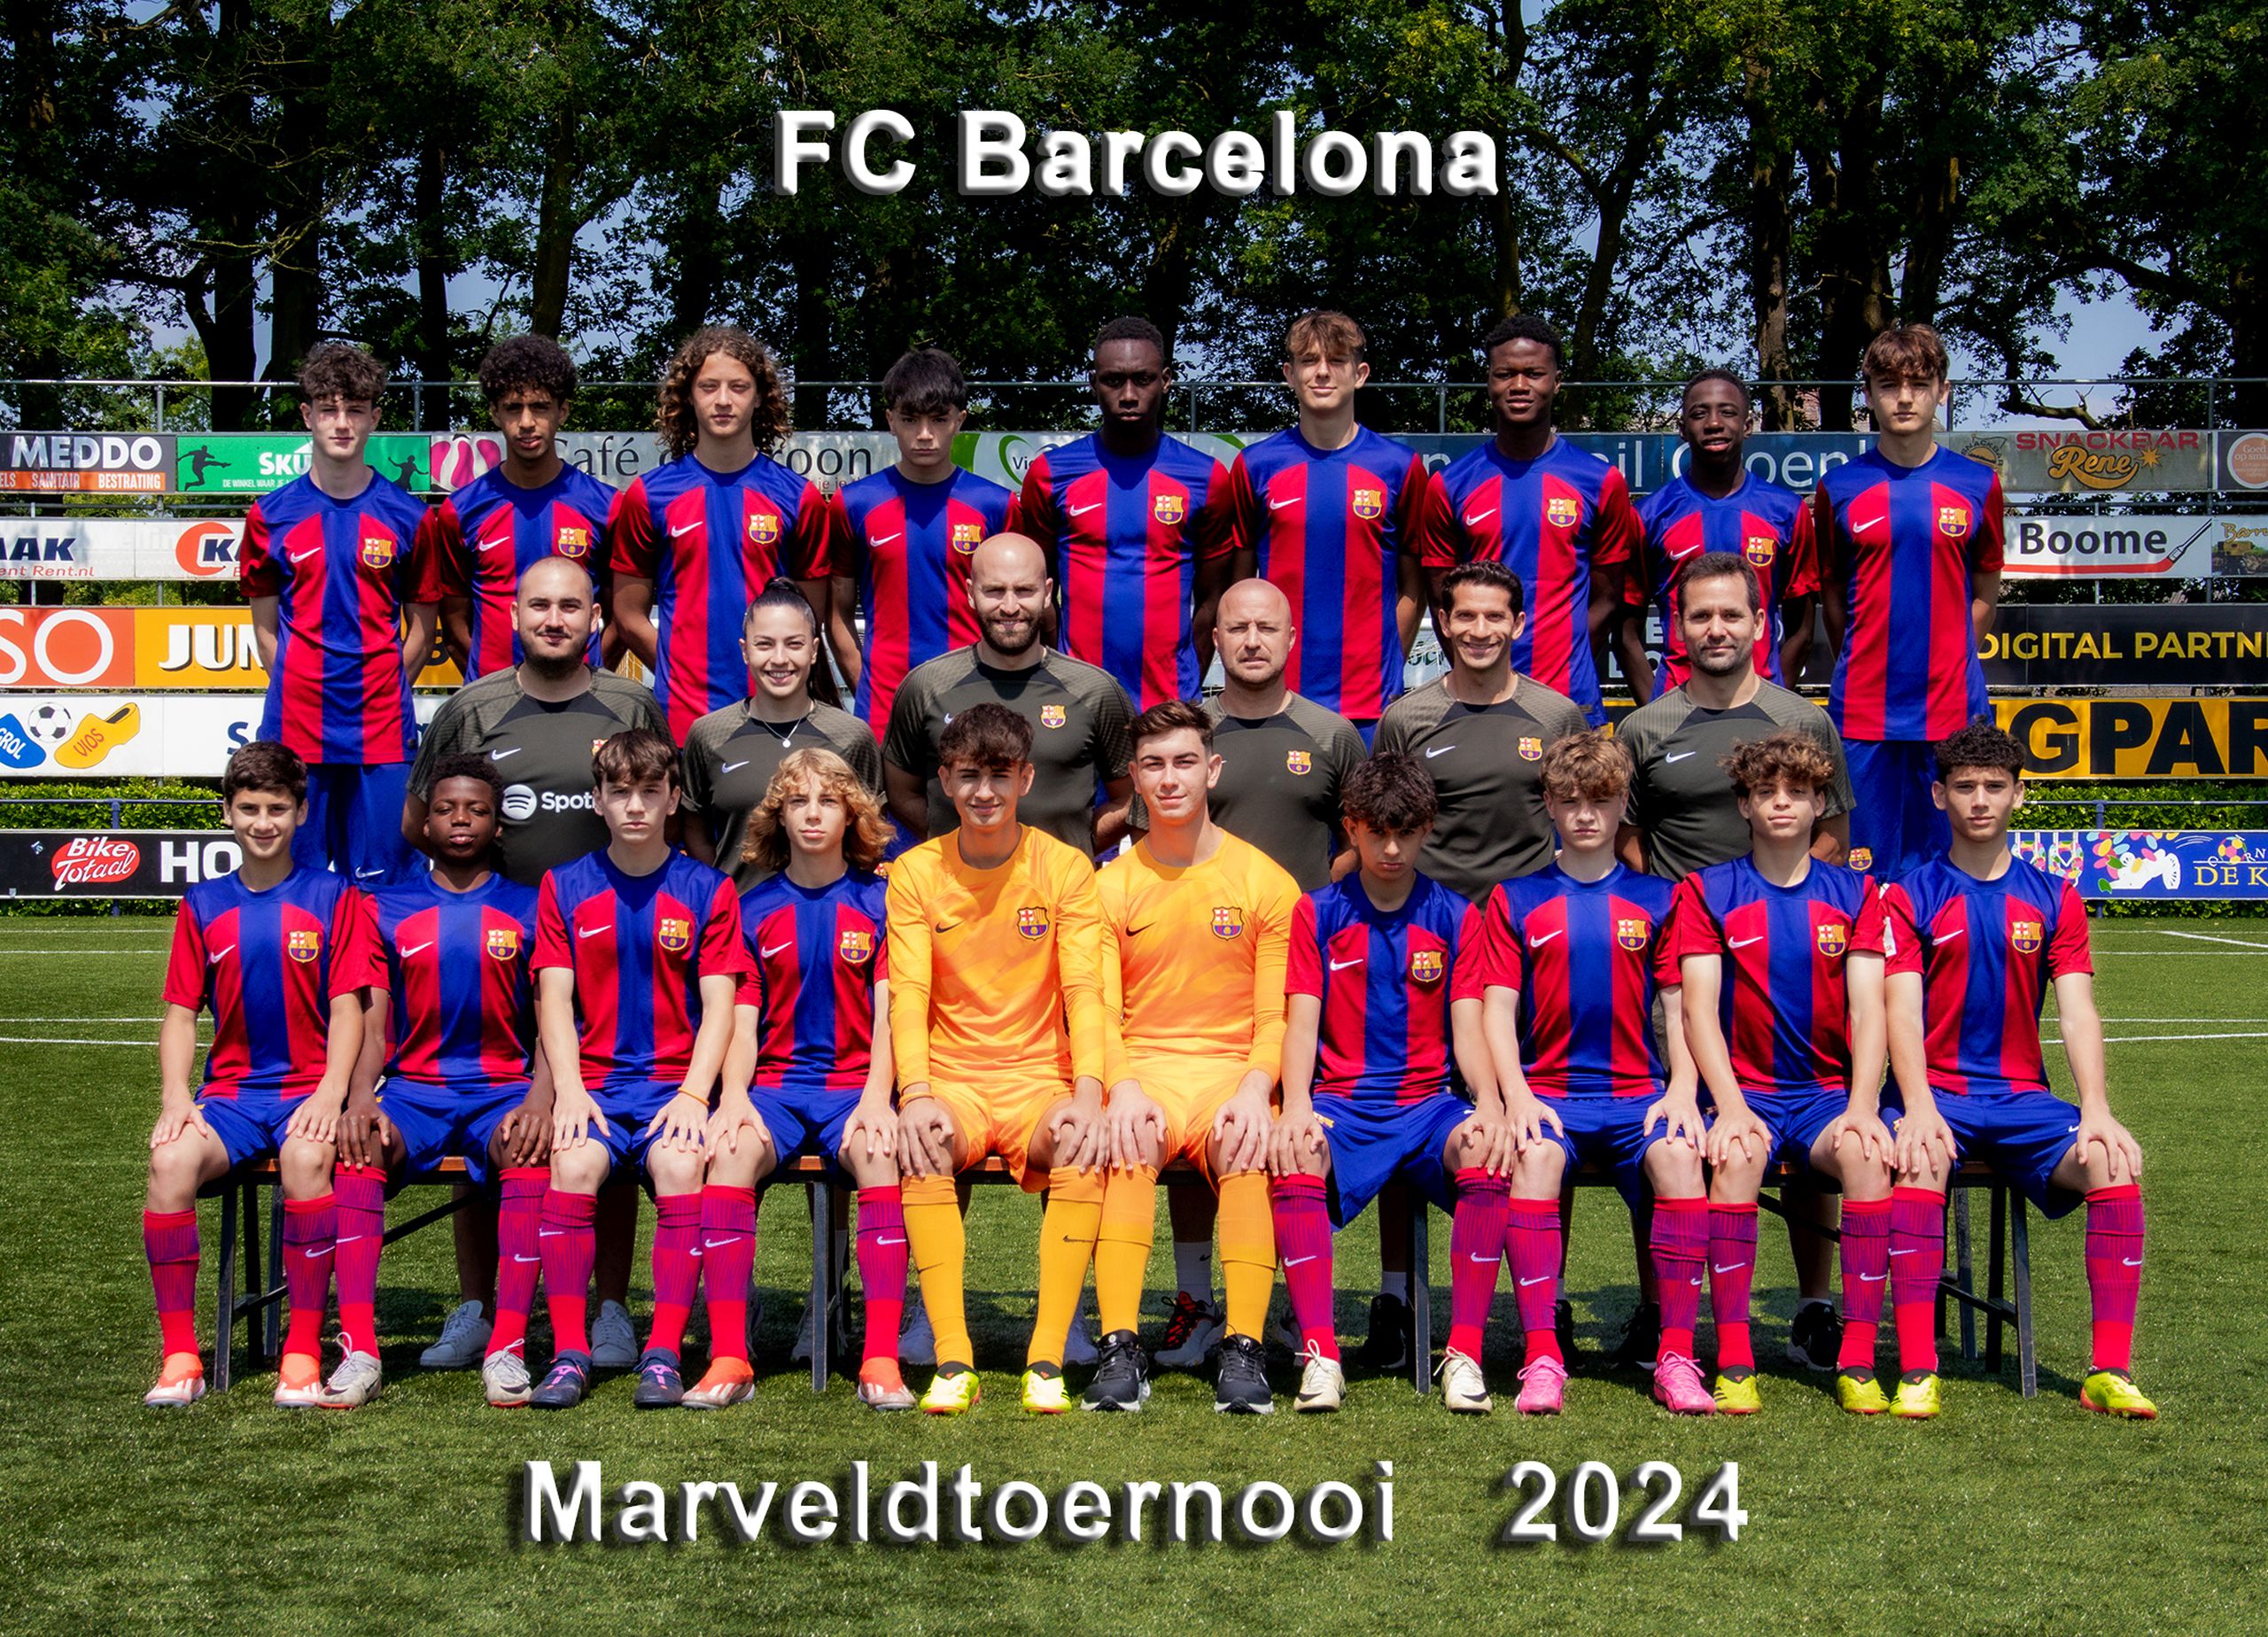 Marveld Tournament 2024 - Team FC Barcelona